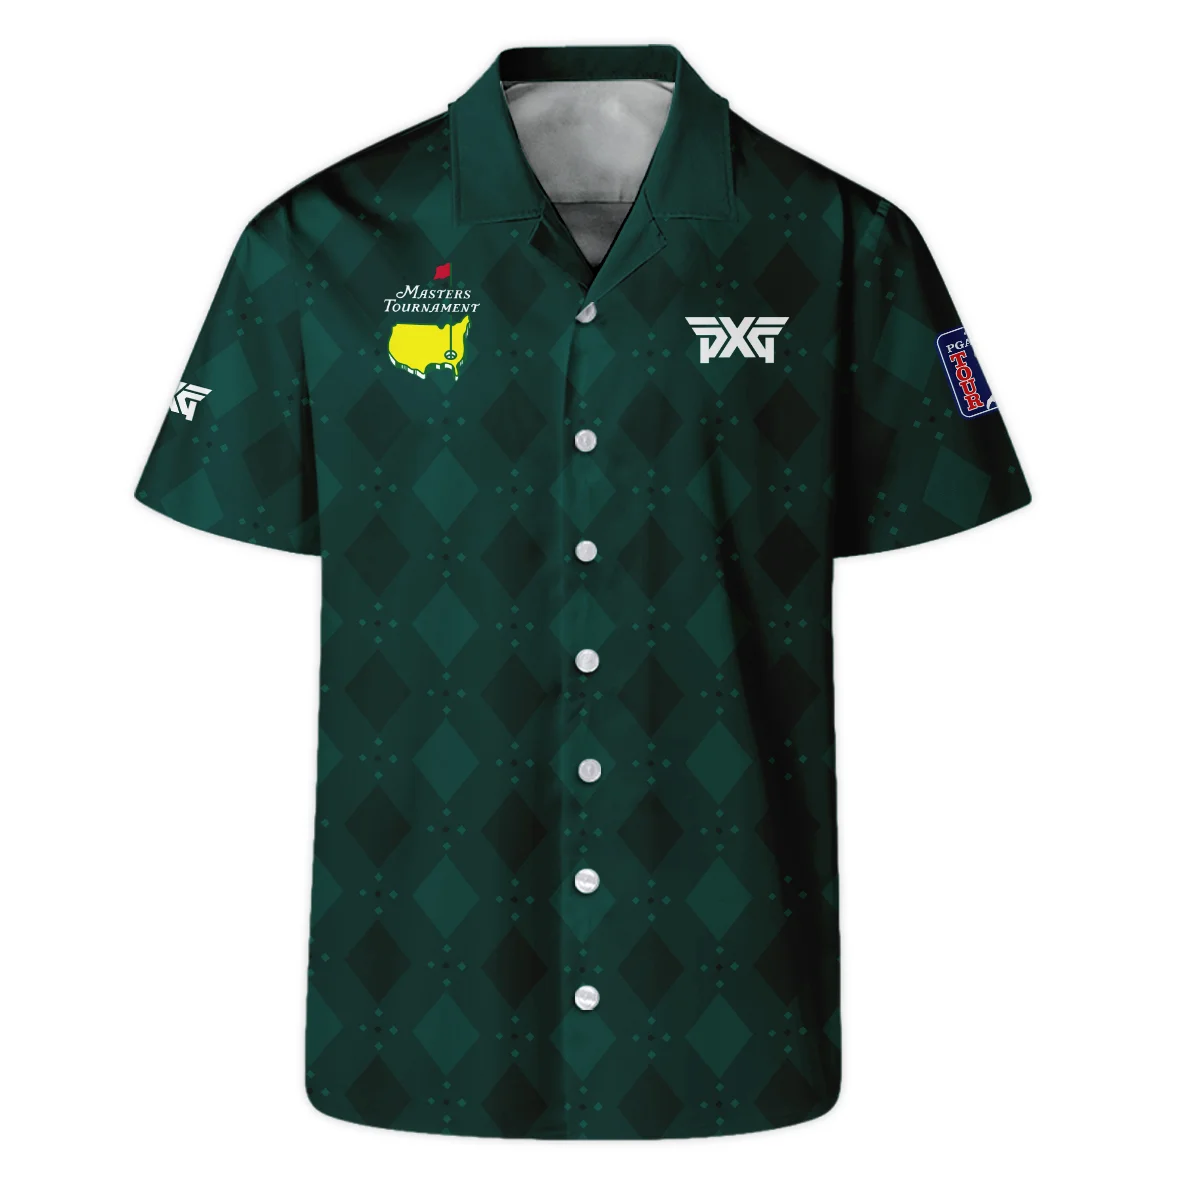 Dark Green Argyle Plaid Pattern Golf Masters Tournament Bomber Jacket Style Classic Bomber Jacket